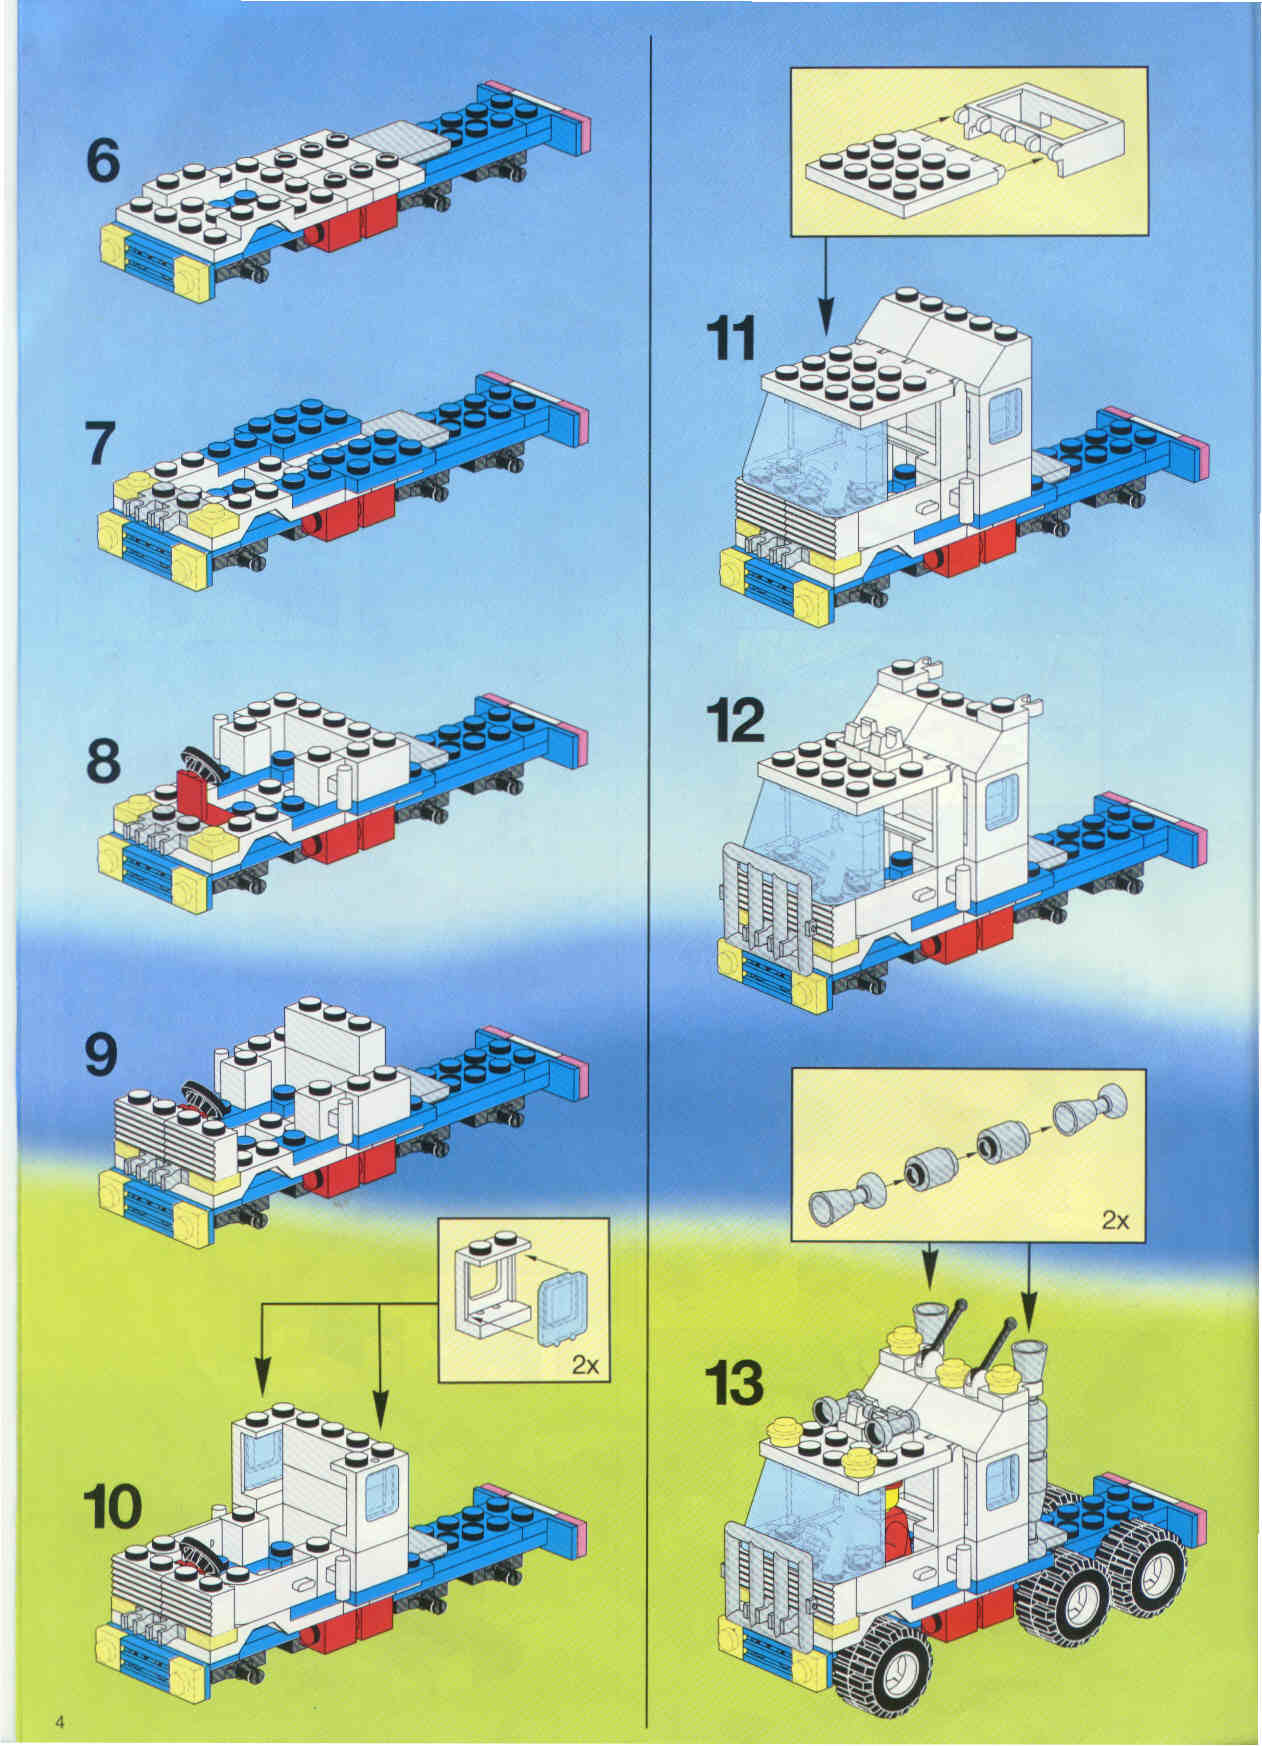 Old LEGO® Instructions letsbuilditagain com